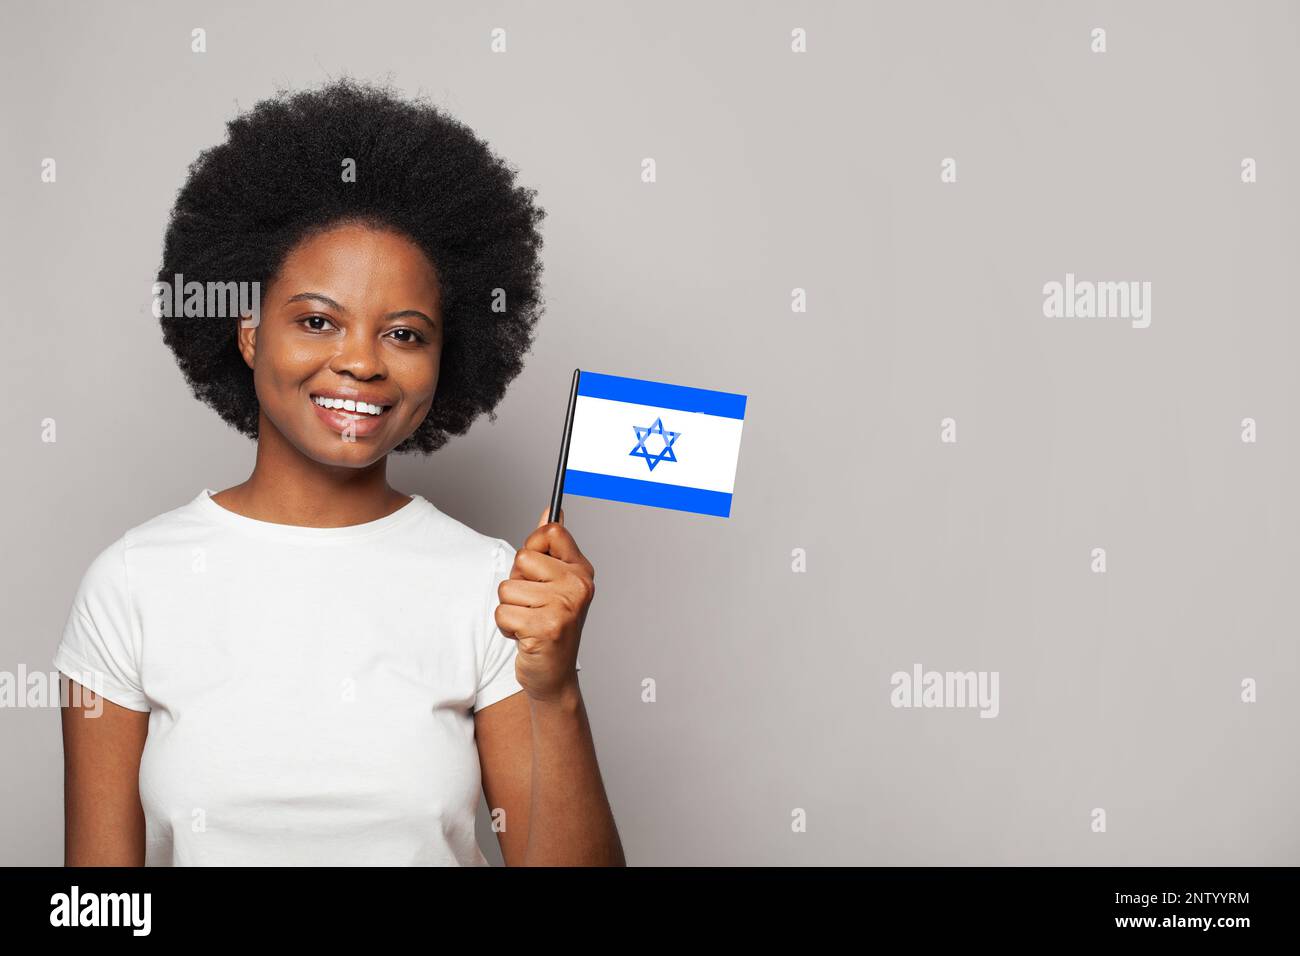 Izraeli woman holding flag of Izrael. Education, business, citizenship and patriotism concept Stock Photo